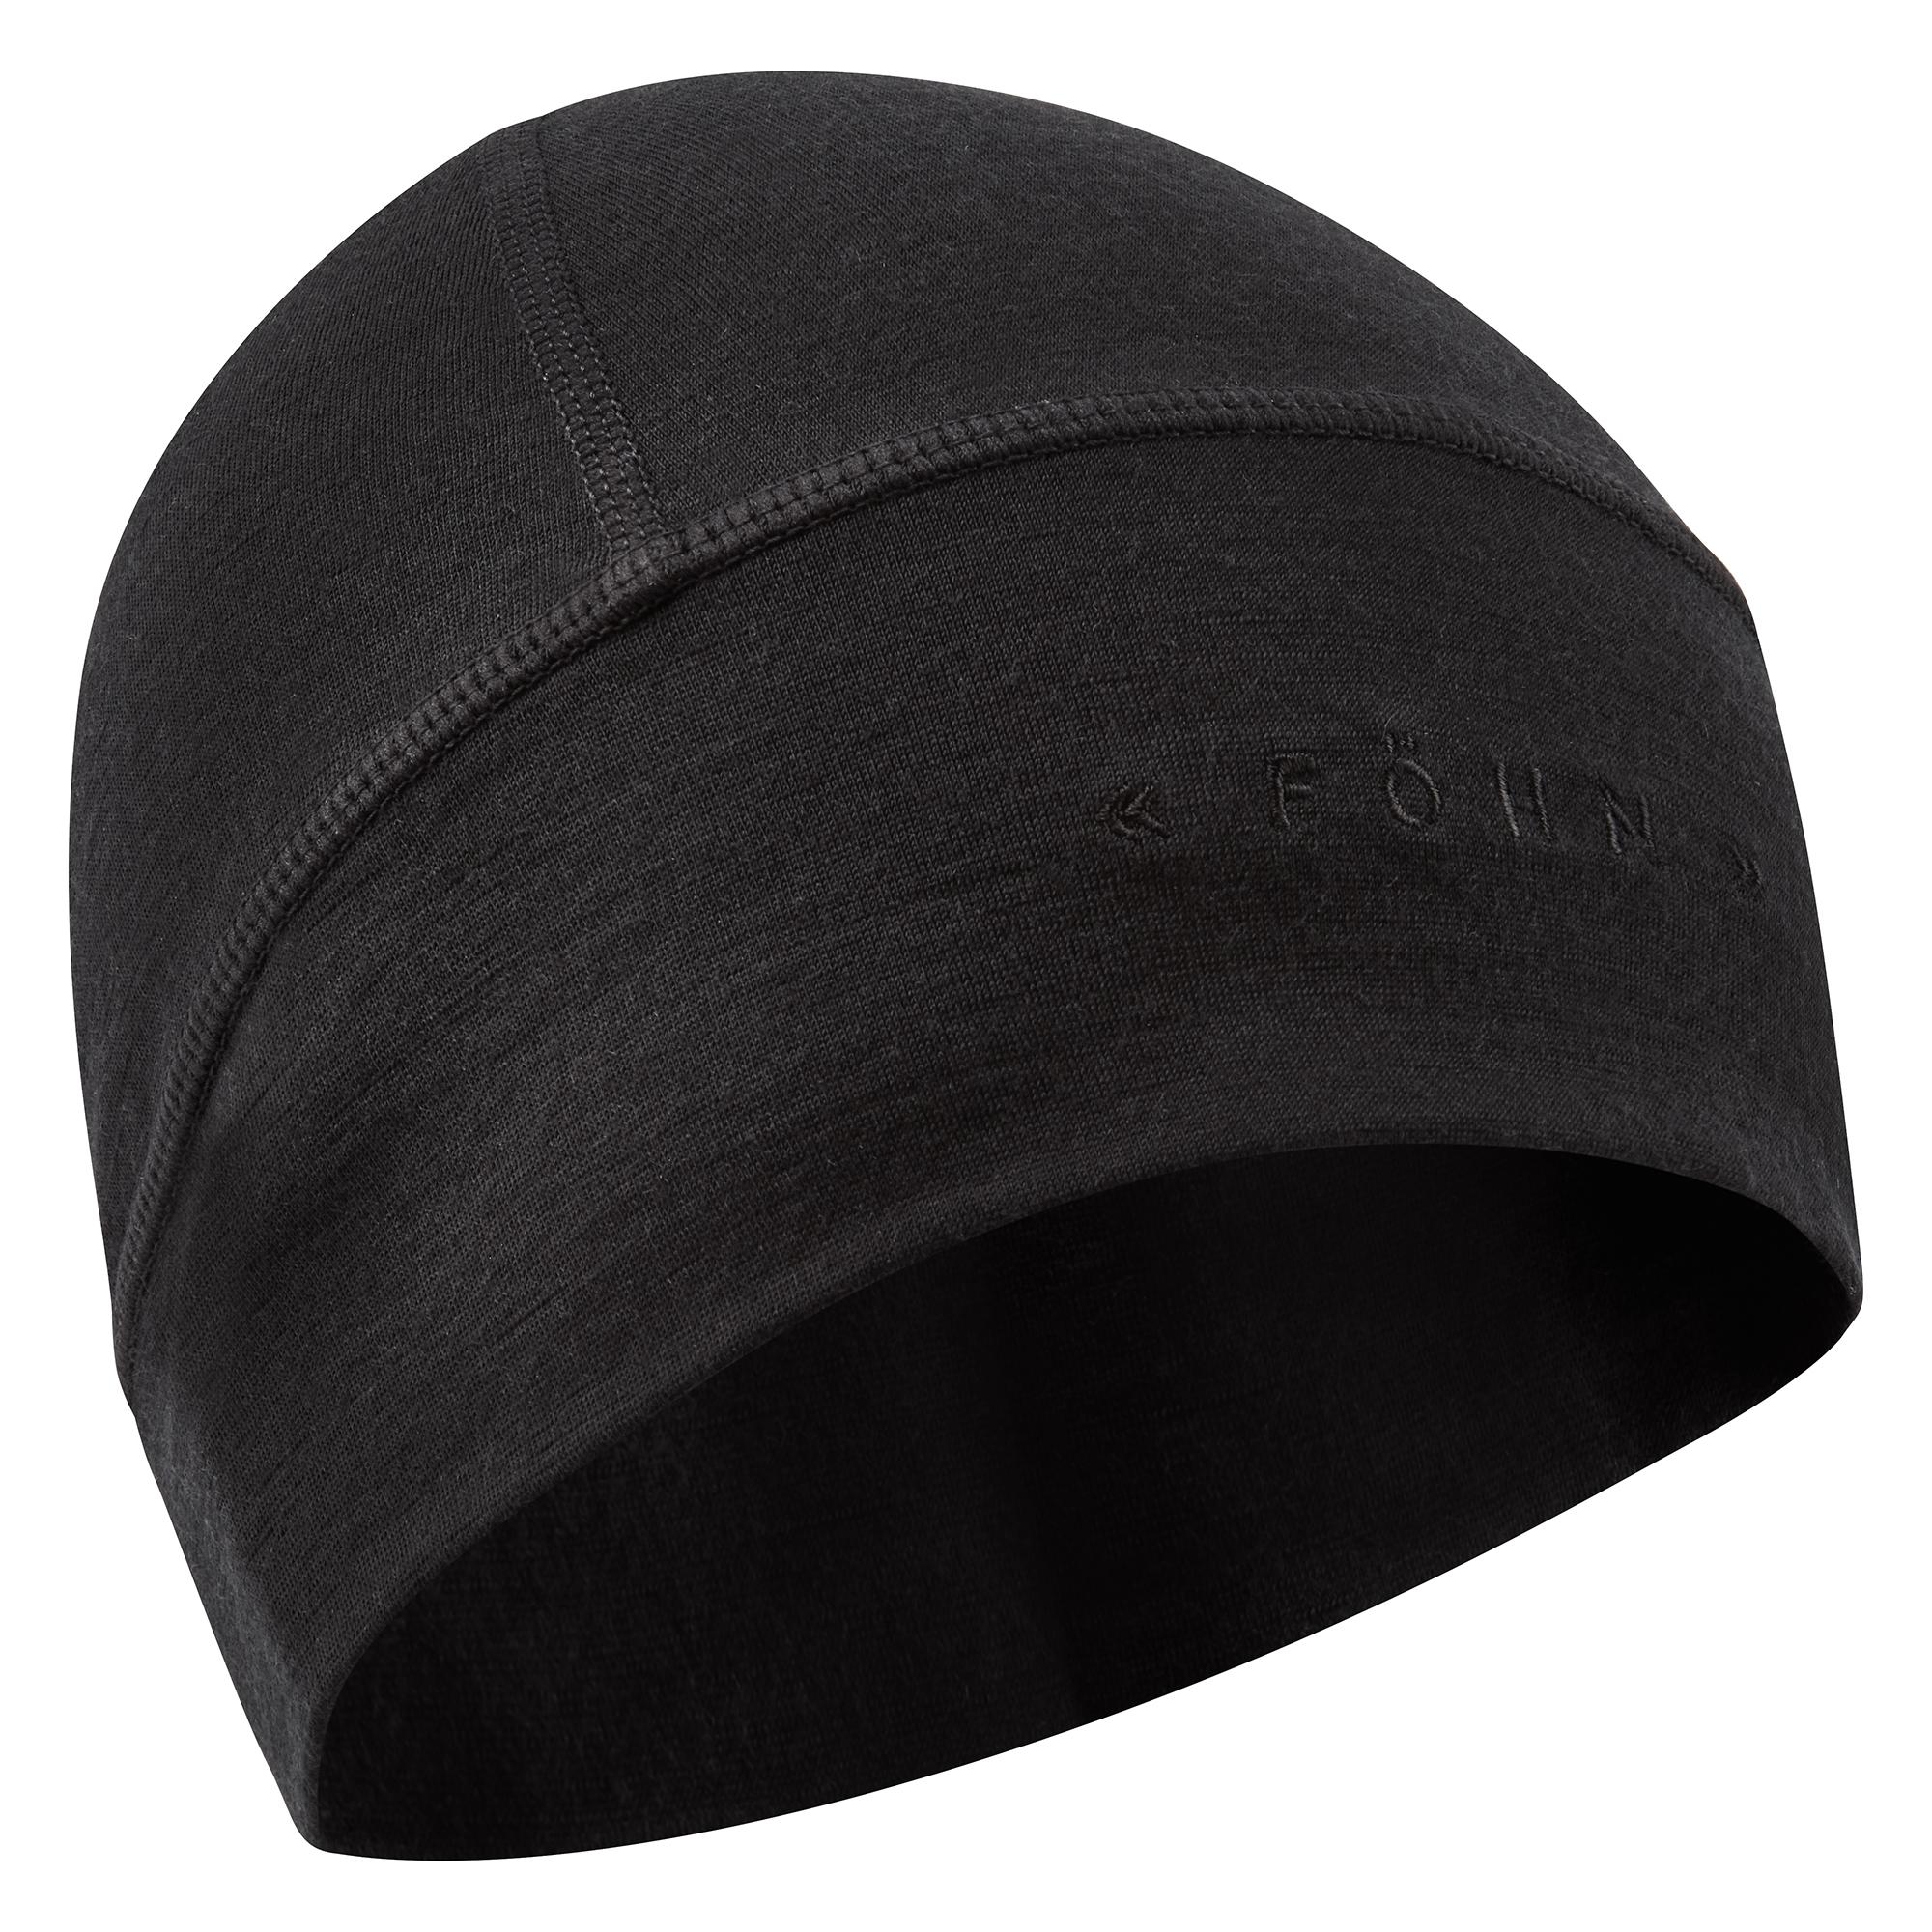 Fhn Merino Hat - Black